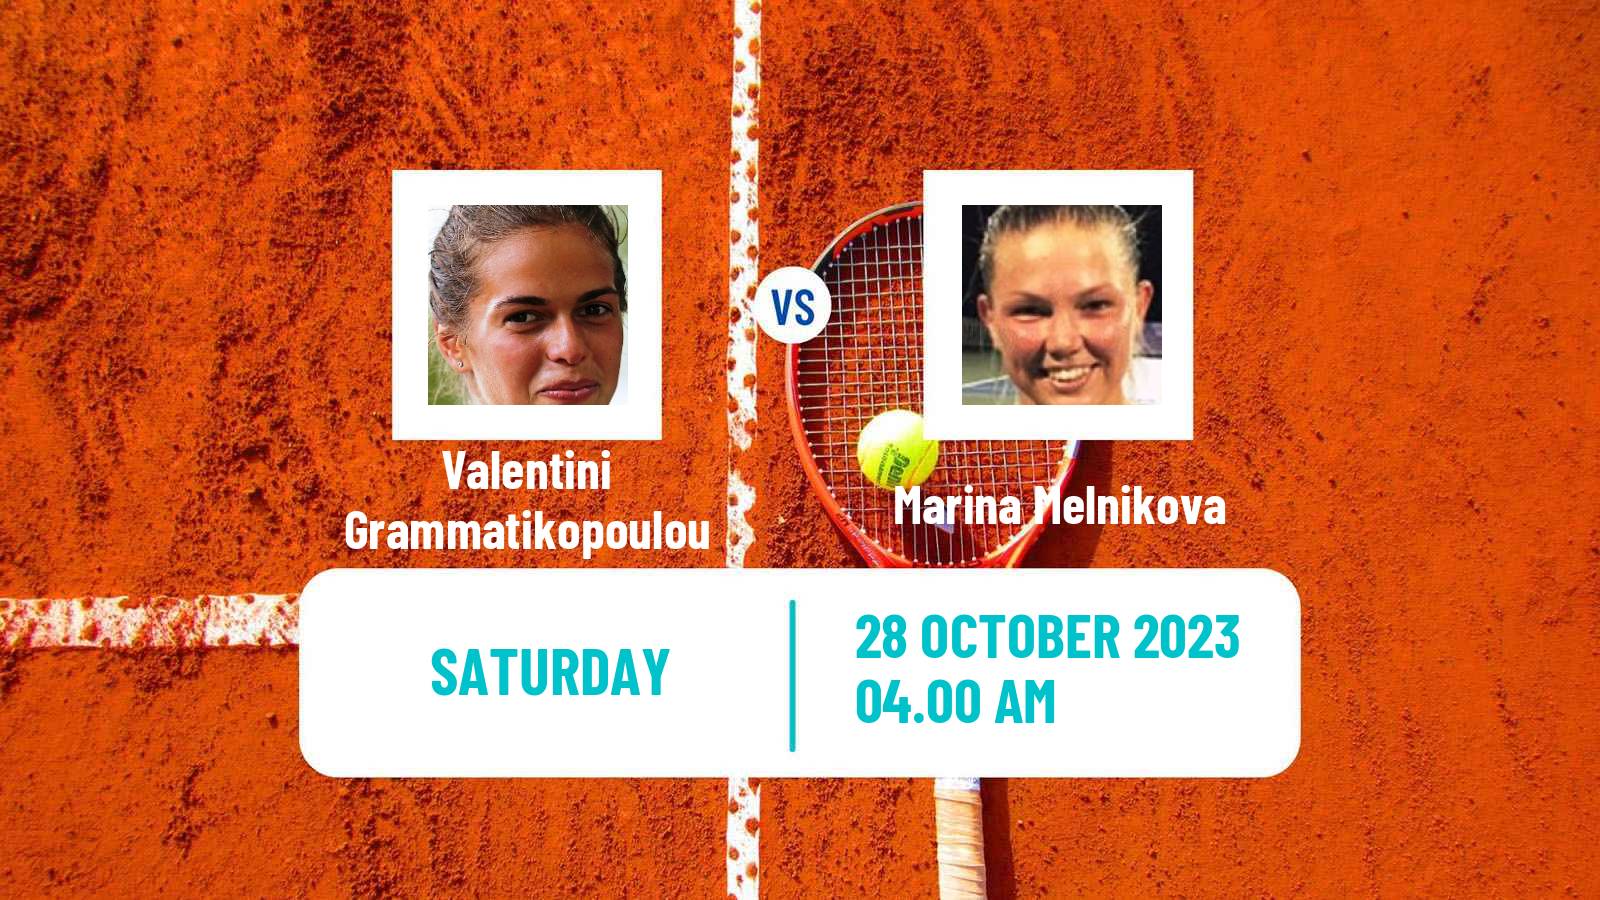 Tennis ITF W25 Sharm Elsheikh 3 Women Valentini Grammatikopoulou - Marina Melnikova